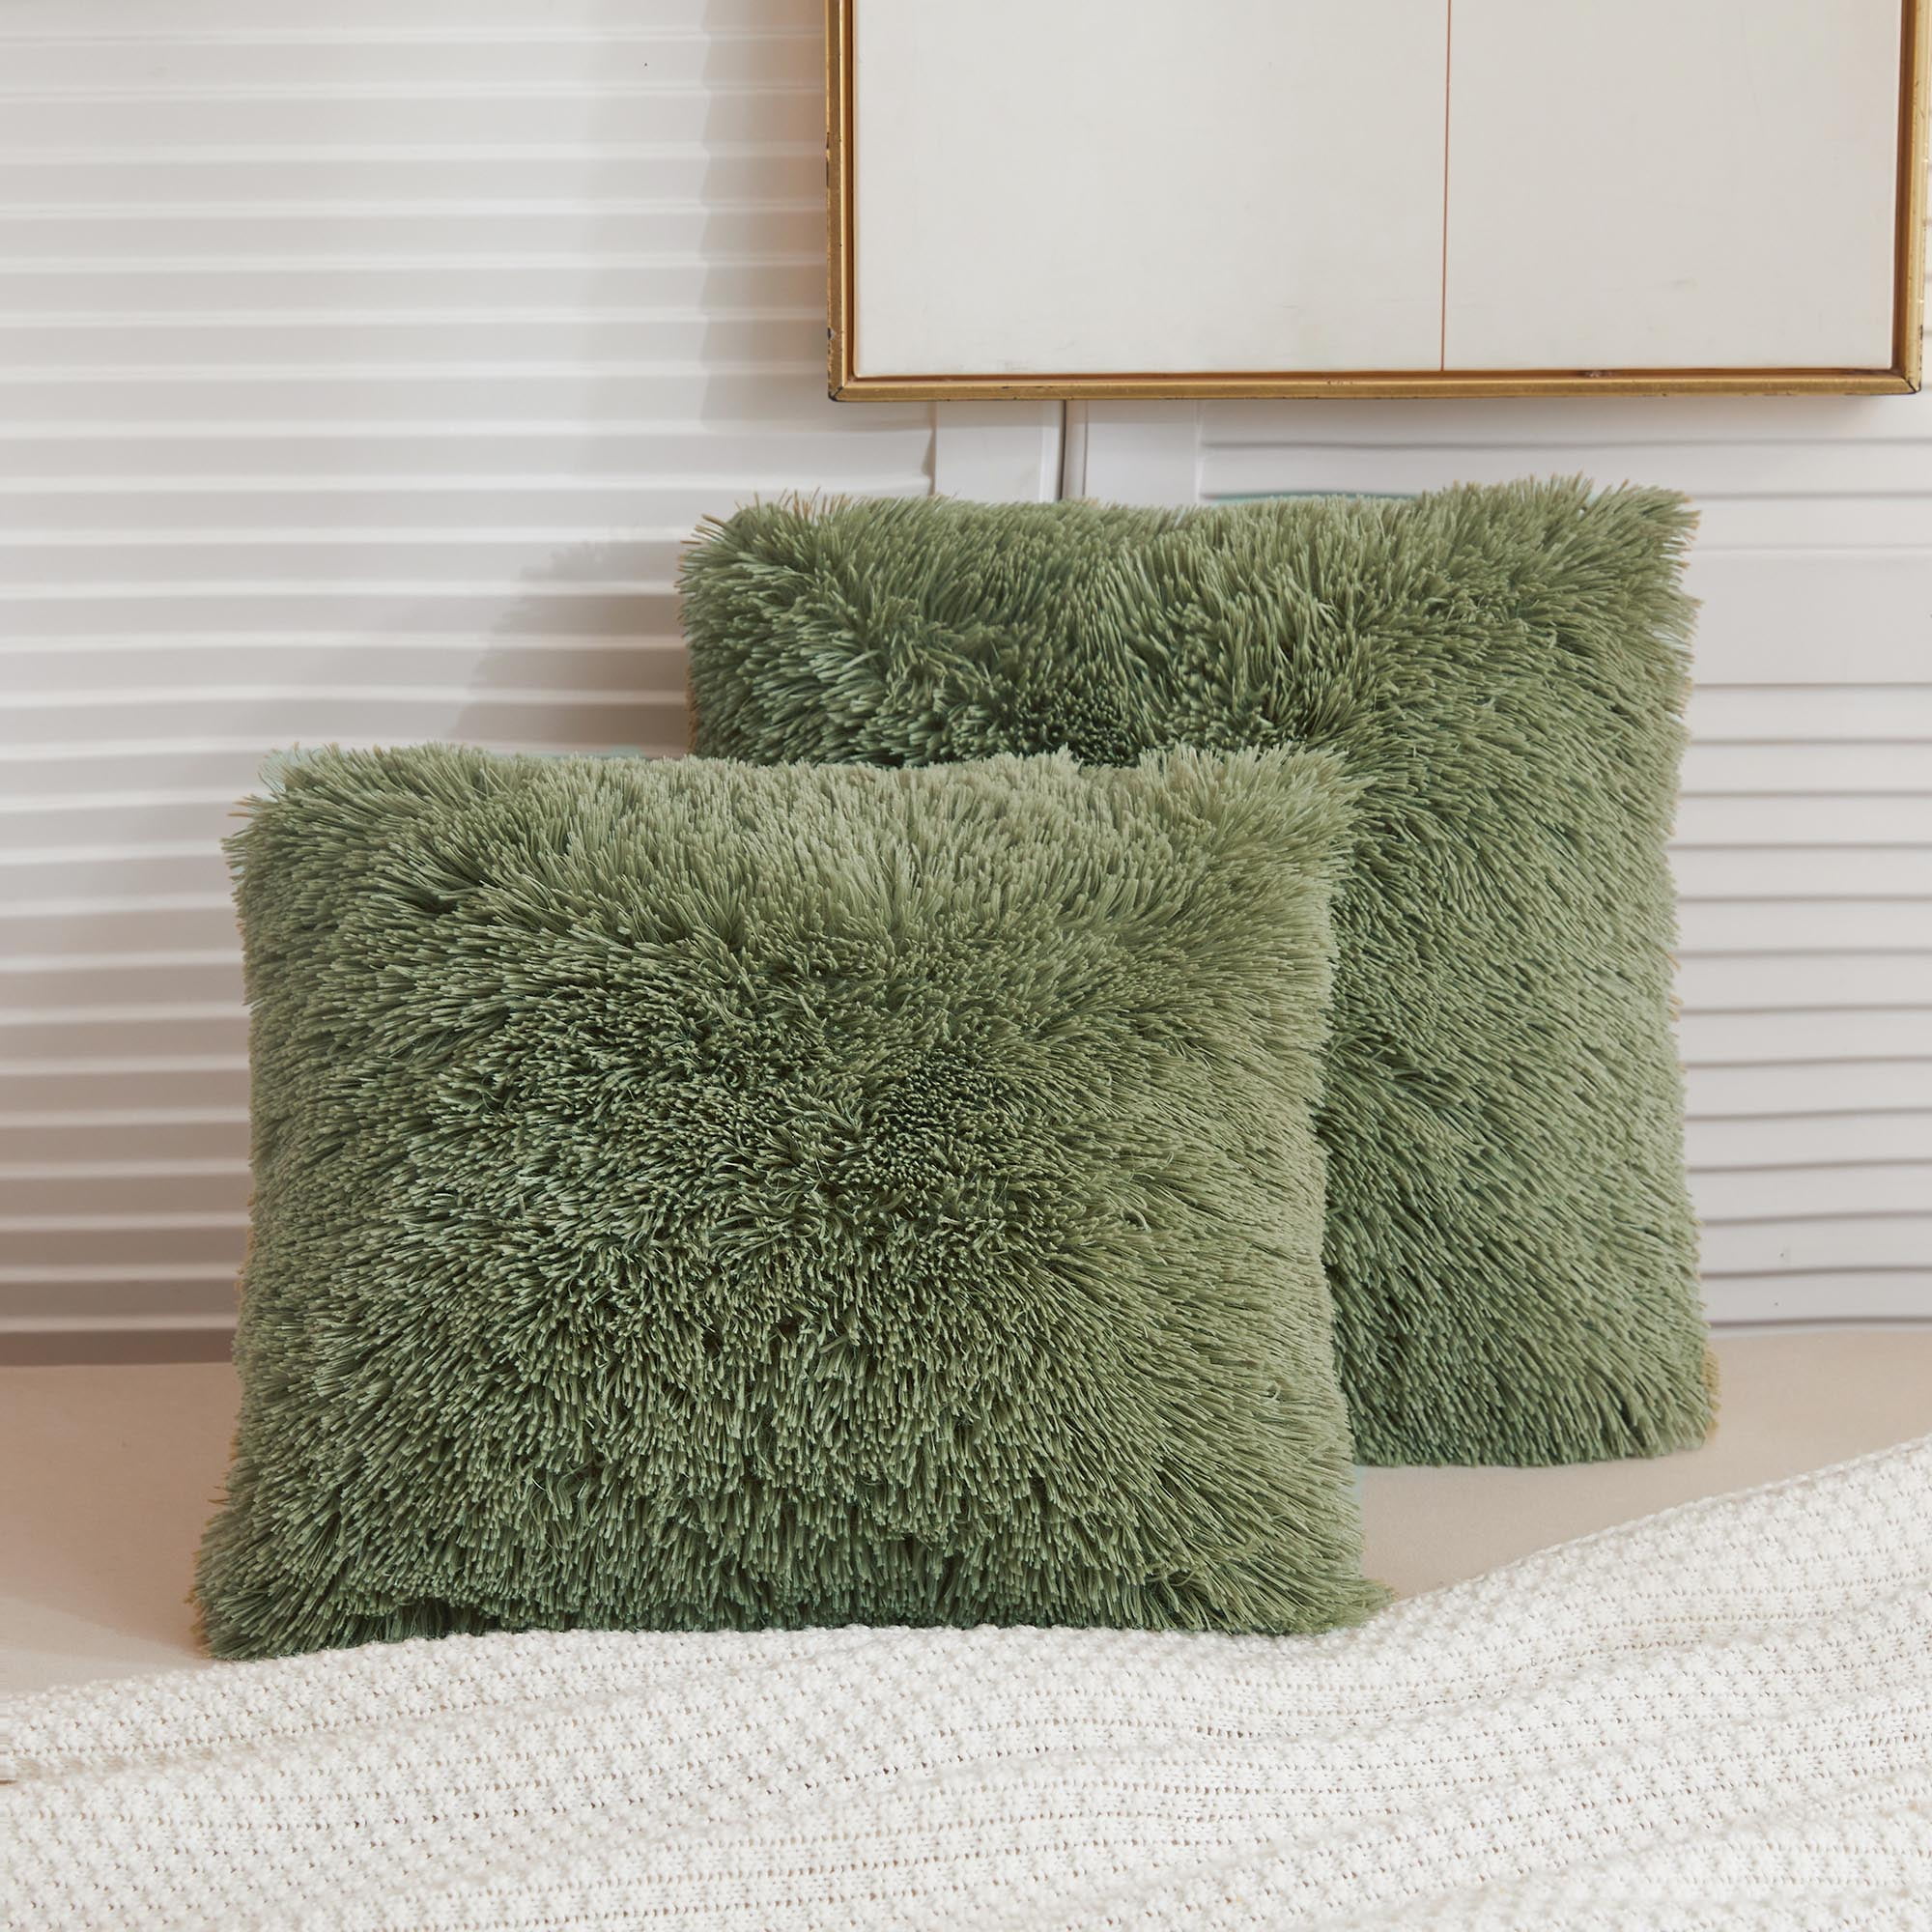 Sofa Pillow Set, Throw Pillows for Couch Green, Modern Pillow Cover Set,  Green and Gray Pillows, Cream Green Grey Cushions 